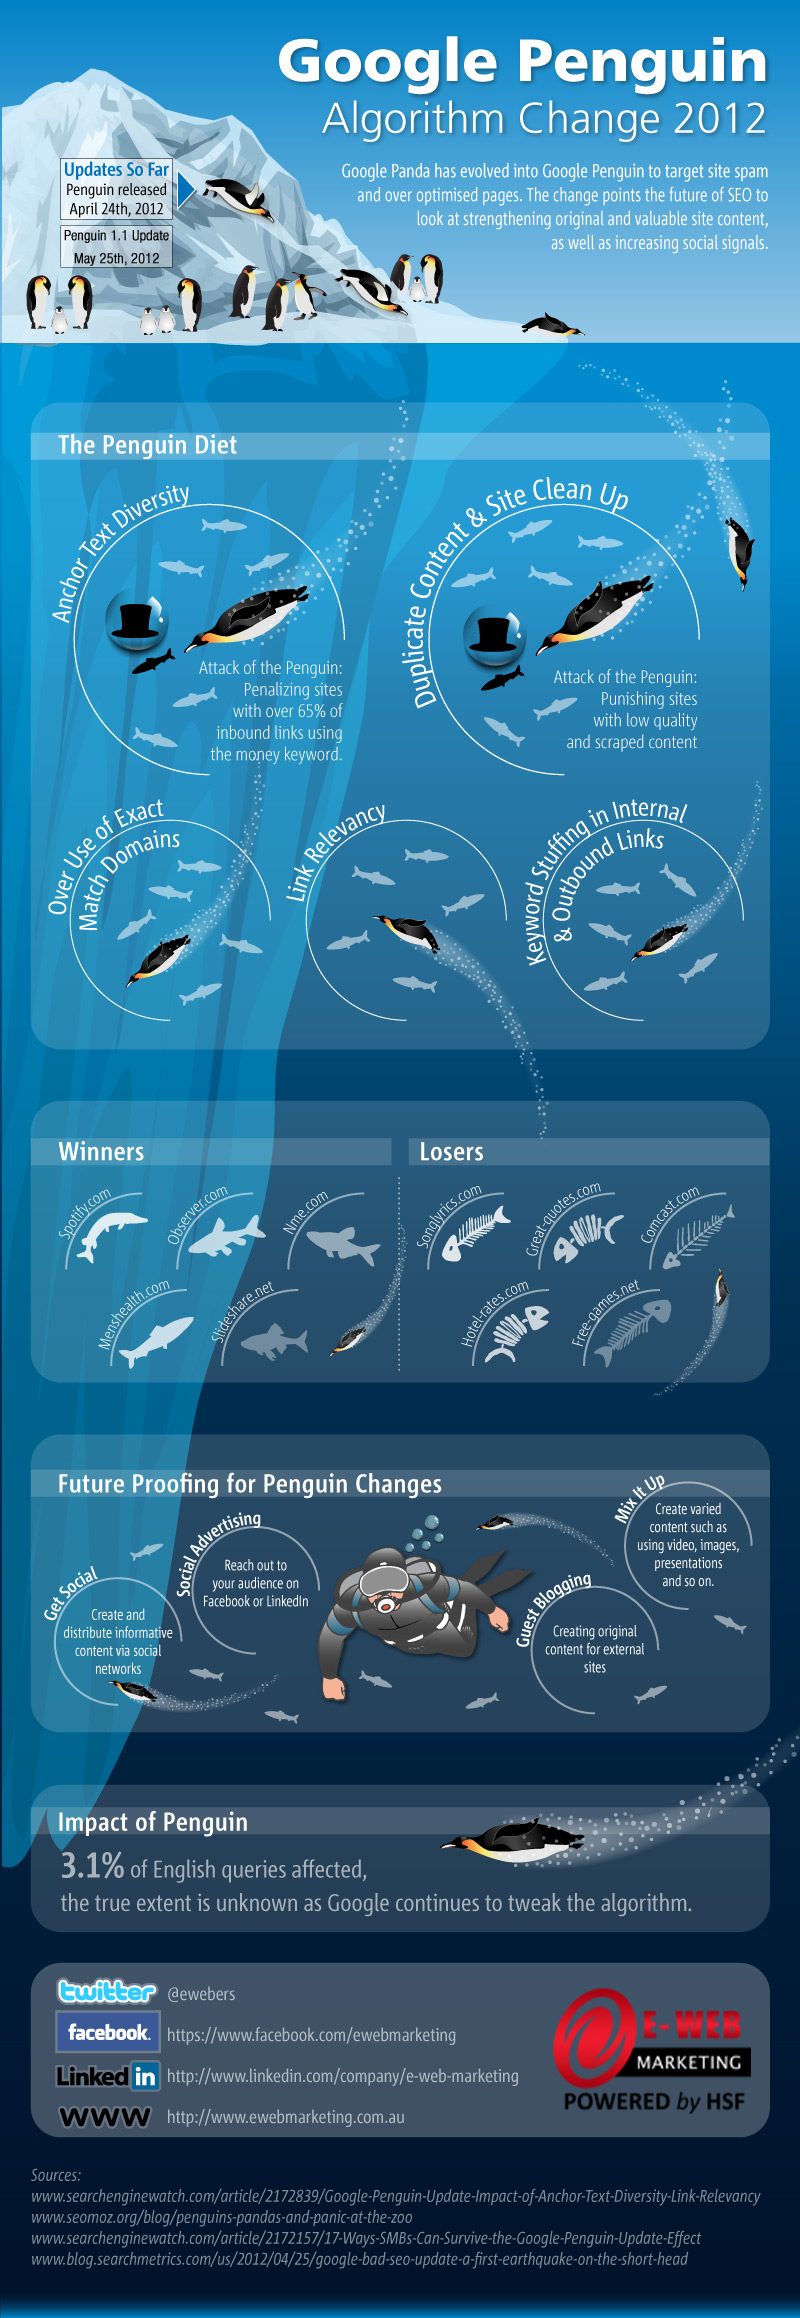 E-Web Marketing's Google Penguin Infographic